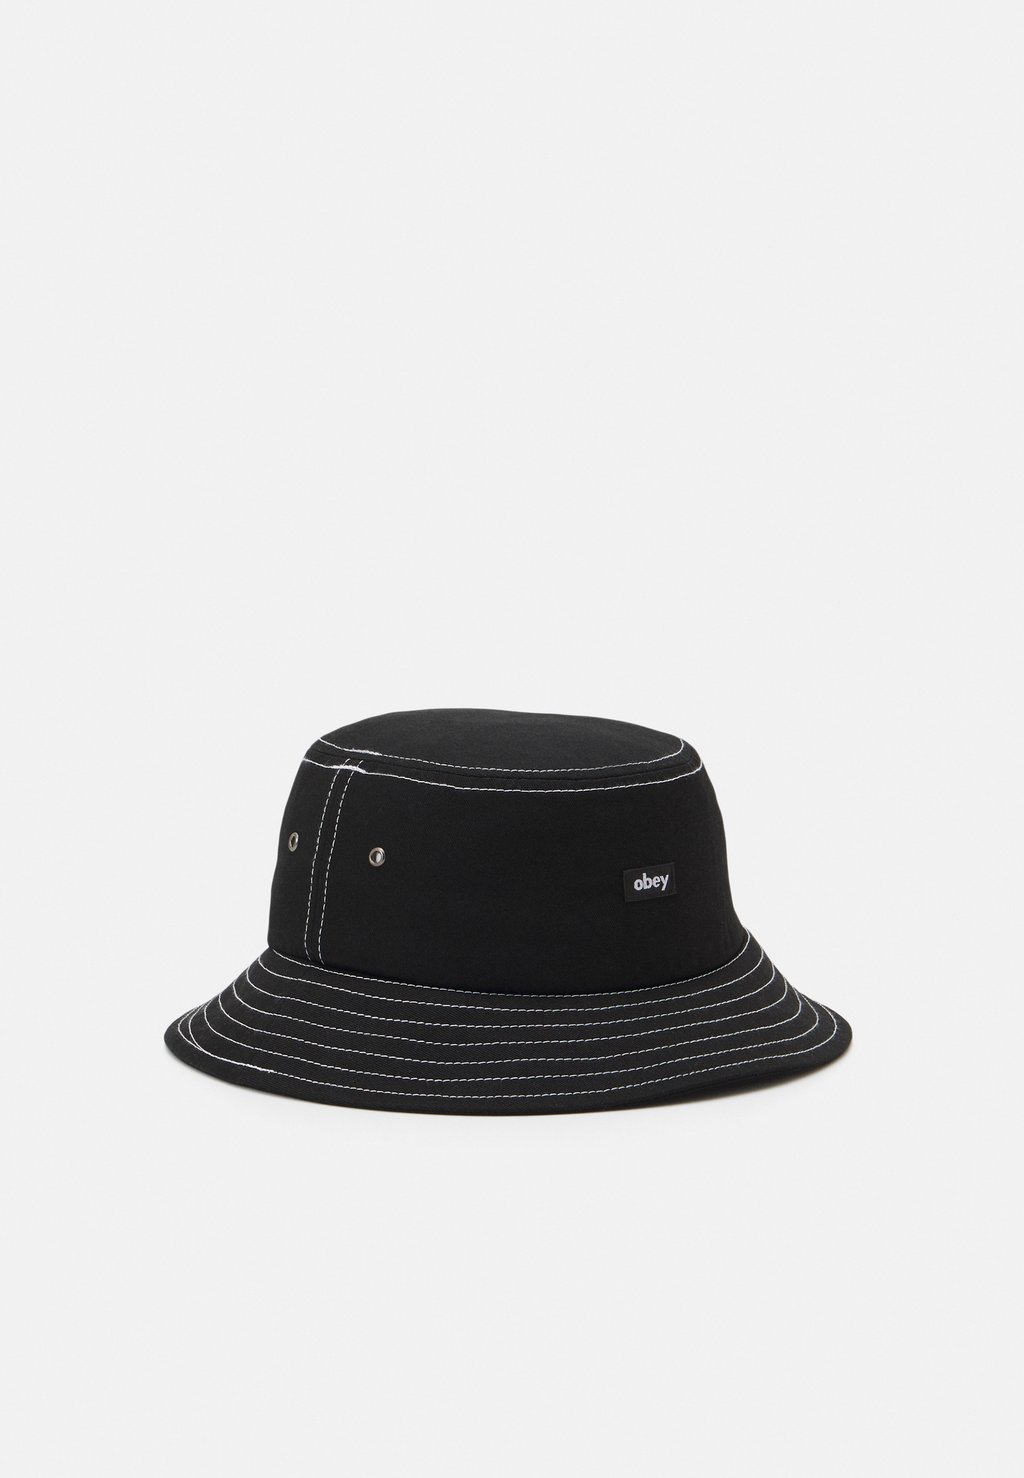 Шляпа Obey Clothing, черный